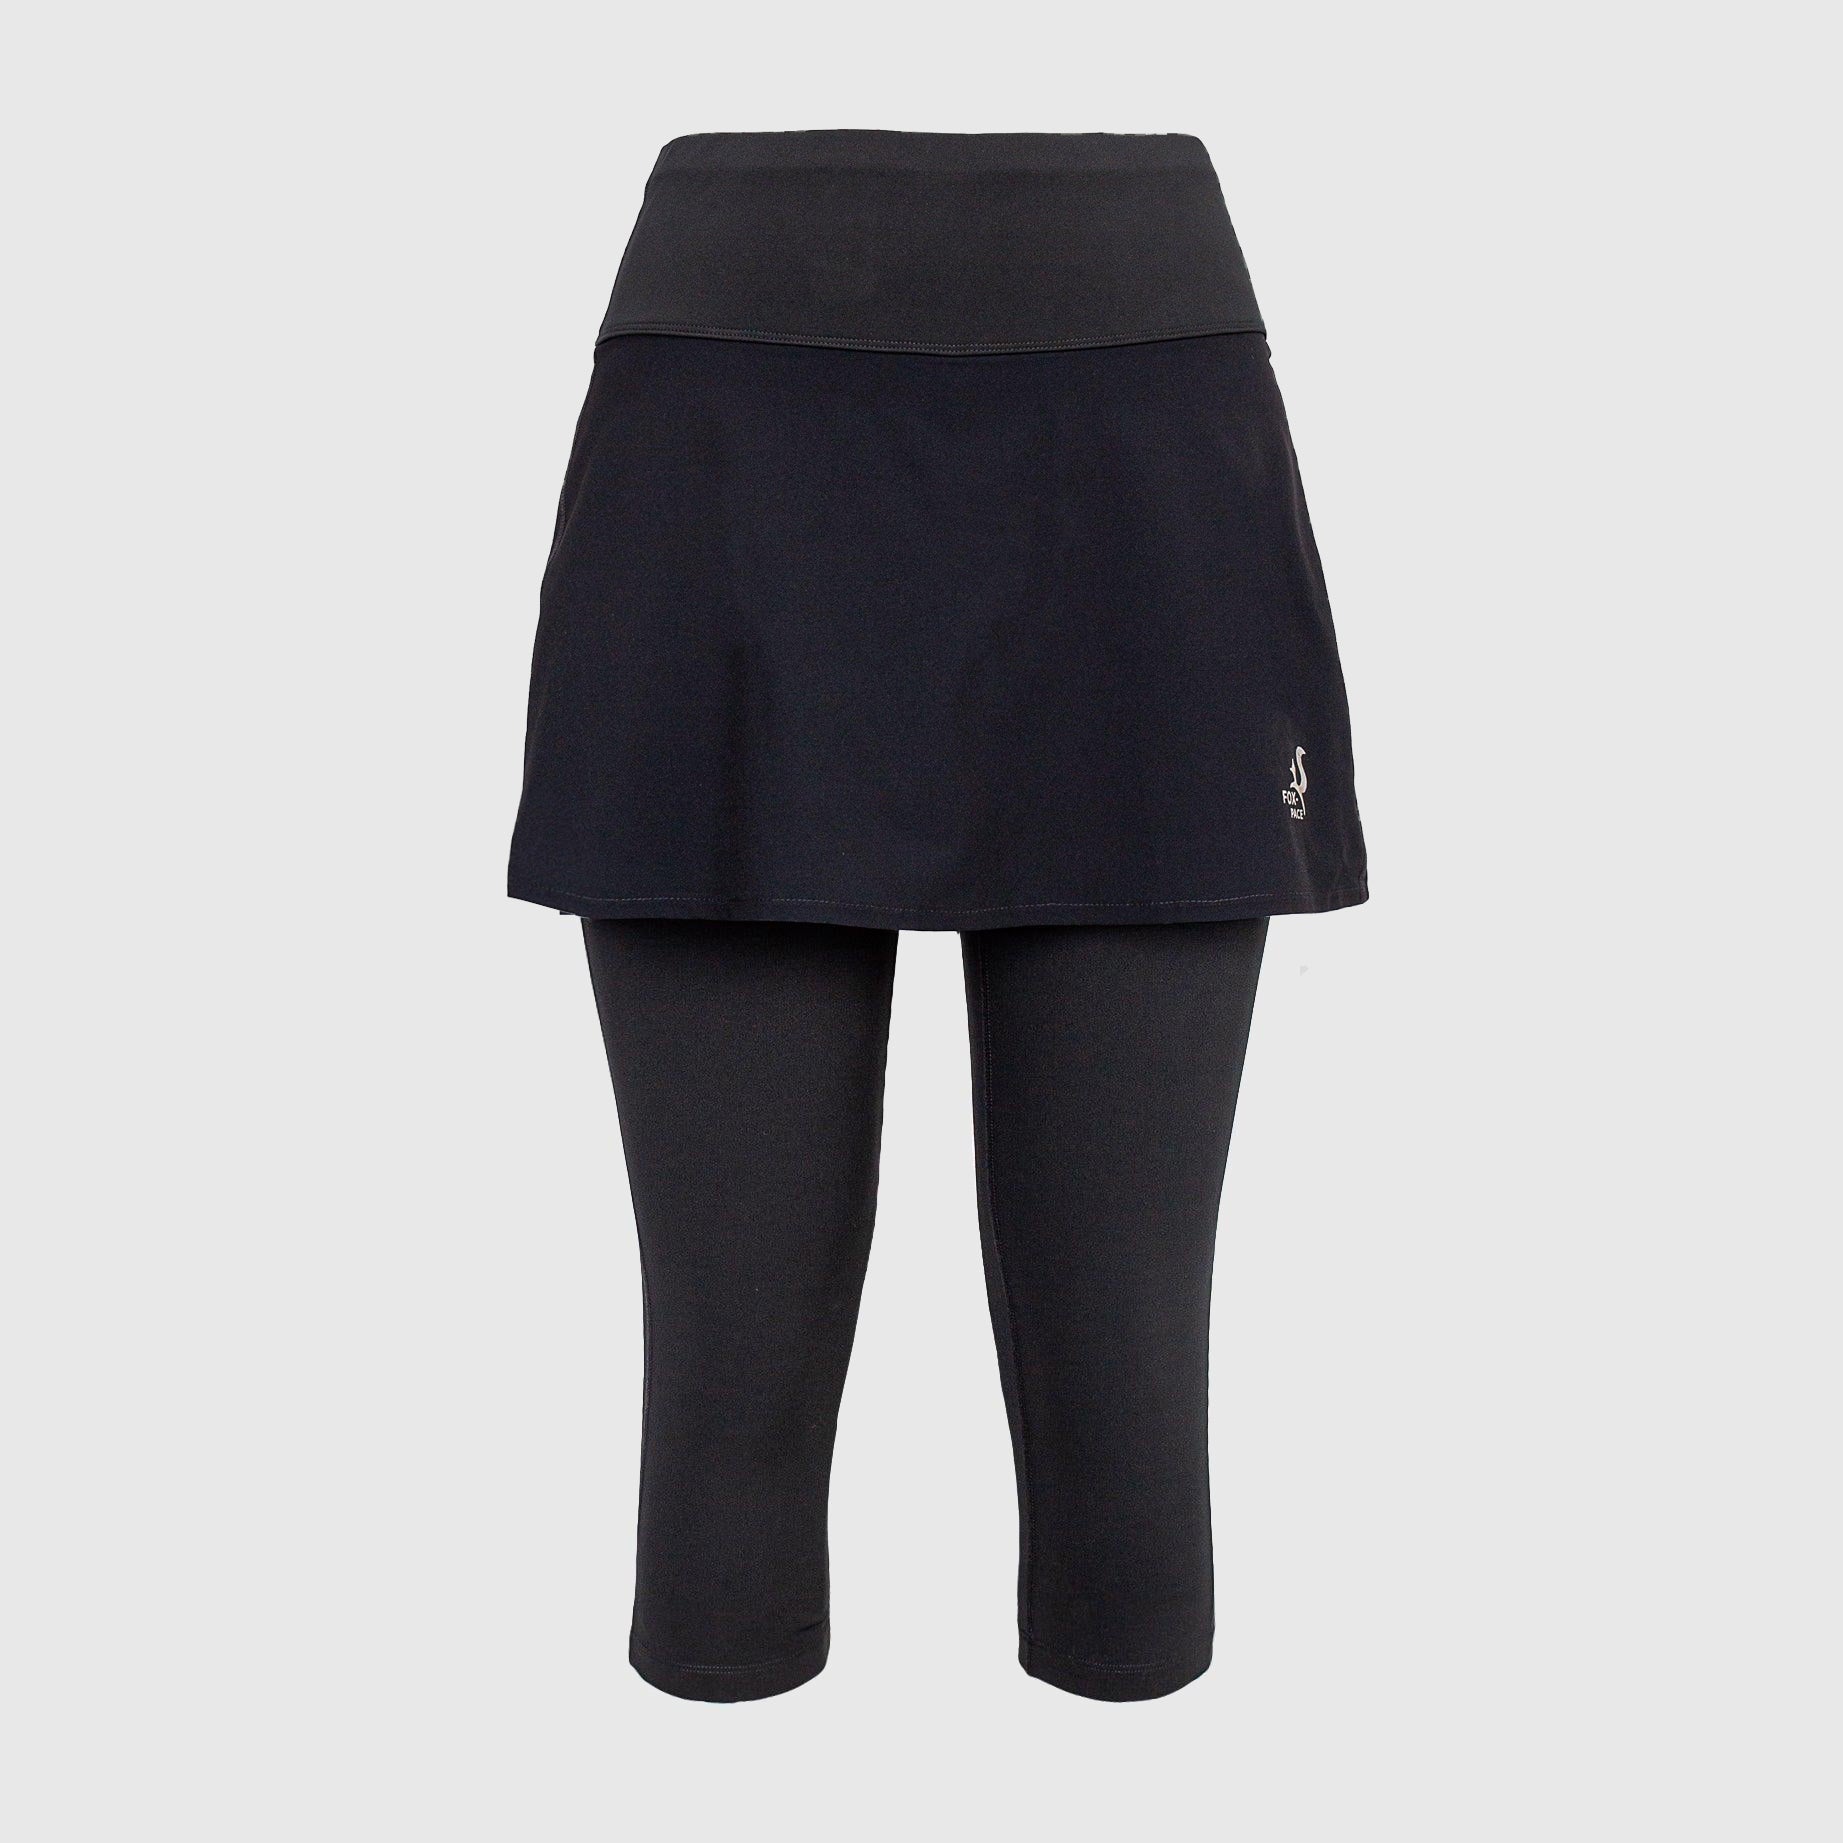 Buy Skirt Sports Lotta Breeze Capri Skirt at Ubuy India